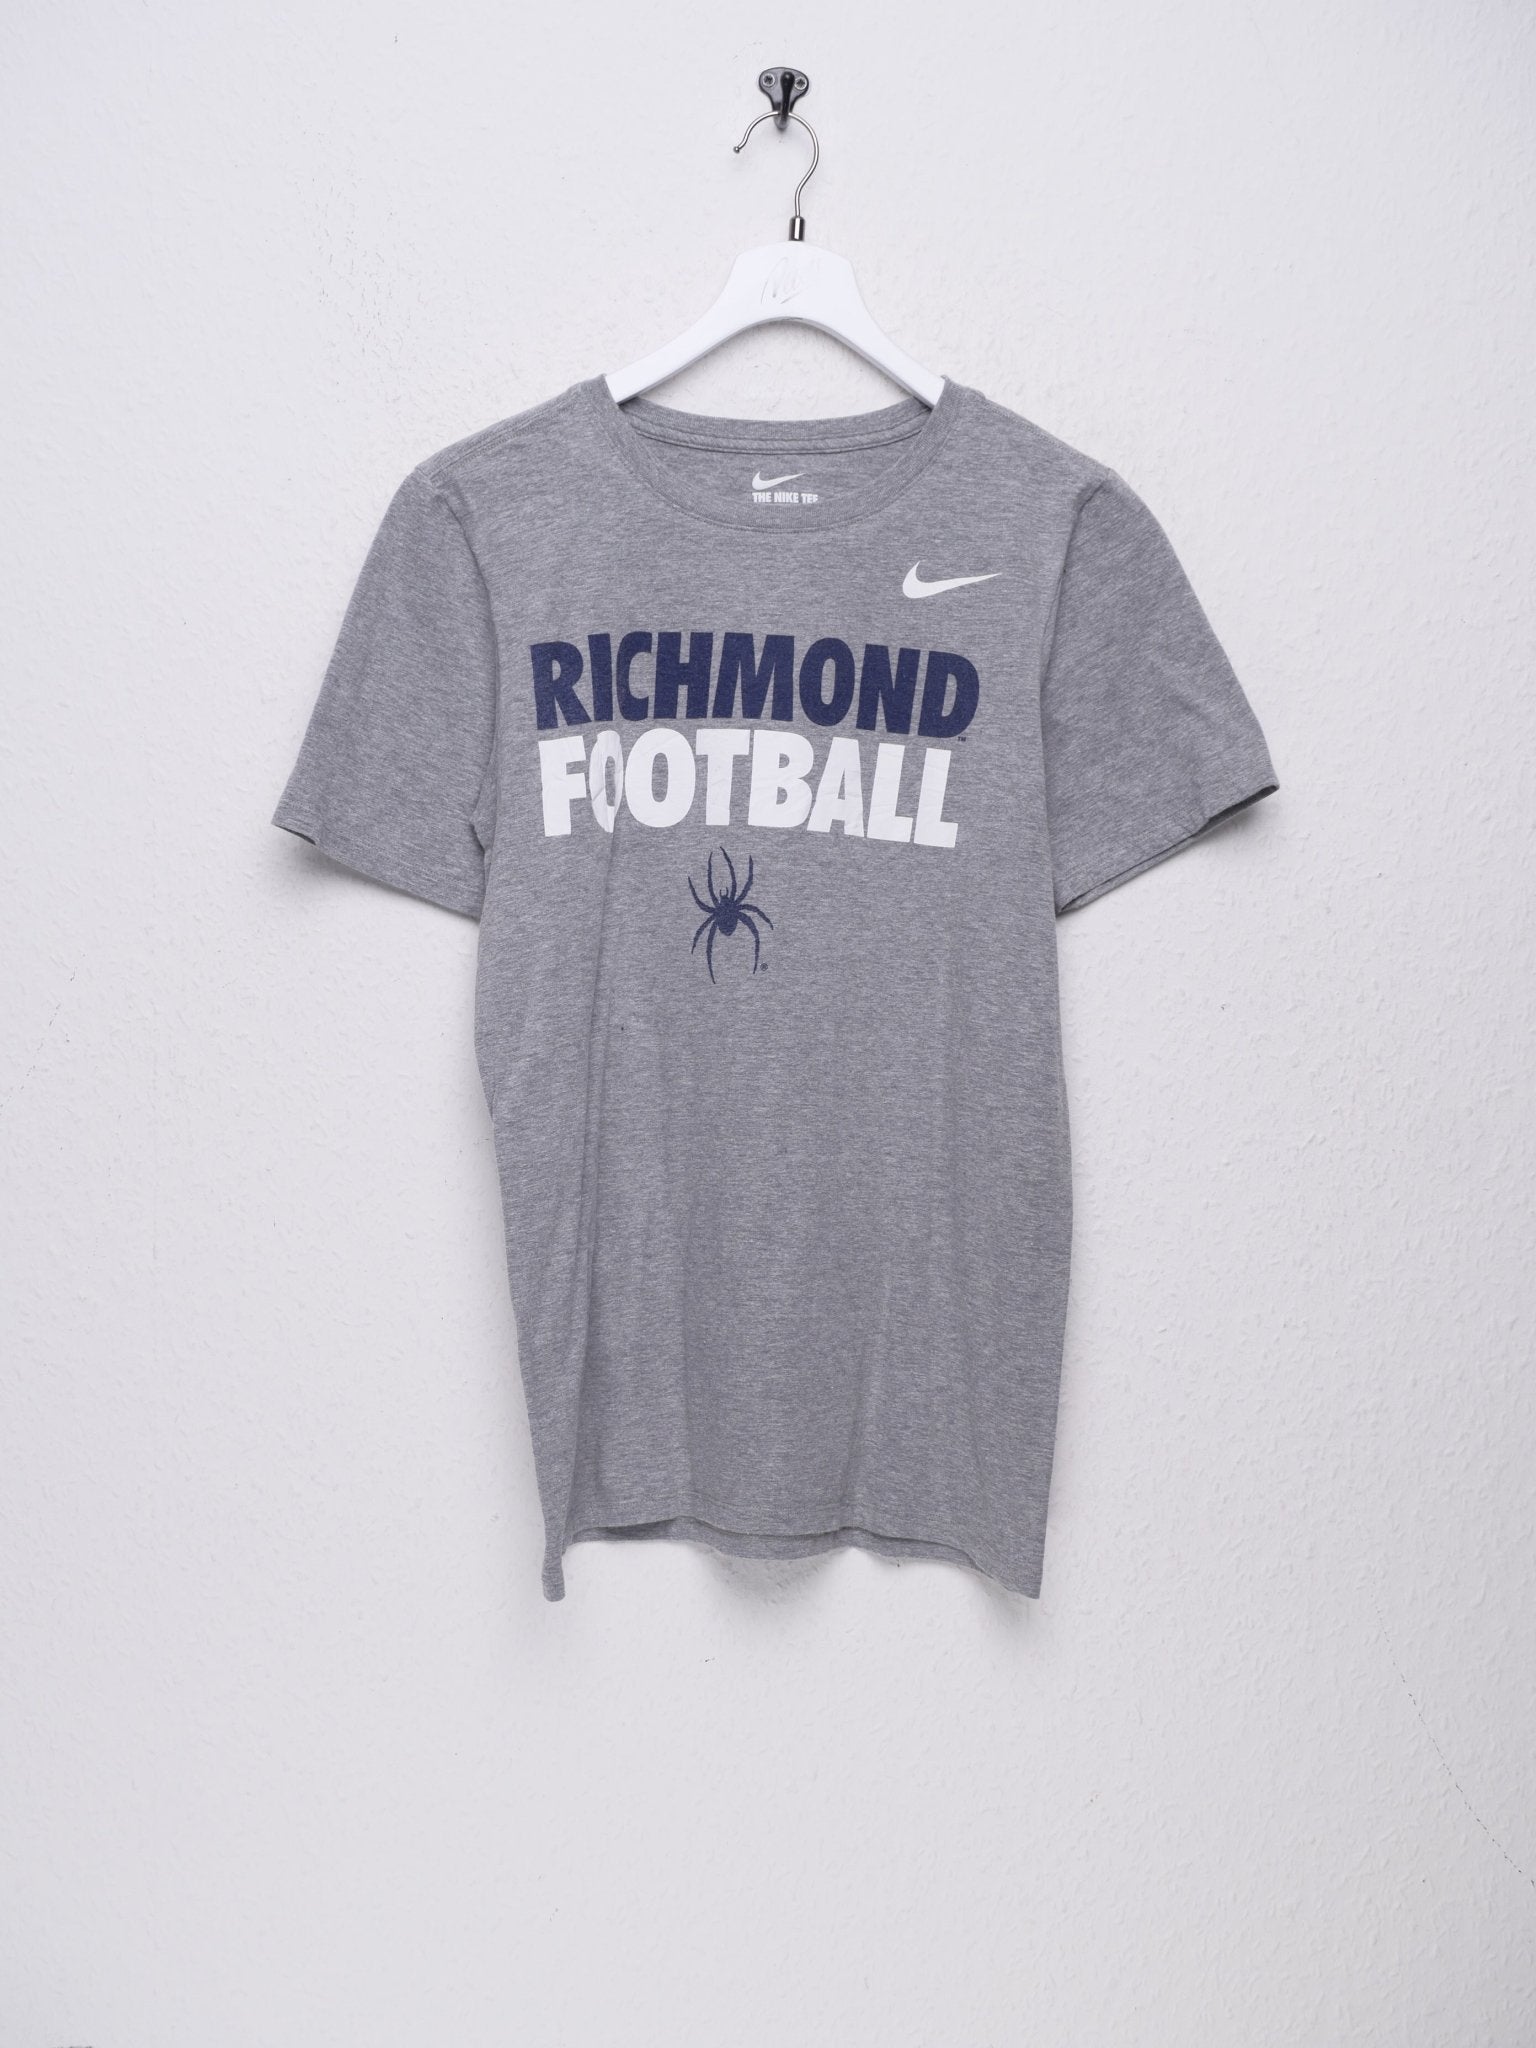 Nike Richmond Football printed Logo Shirt - Peeces